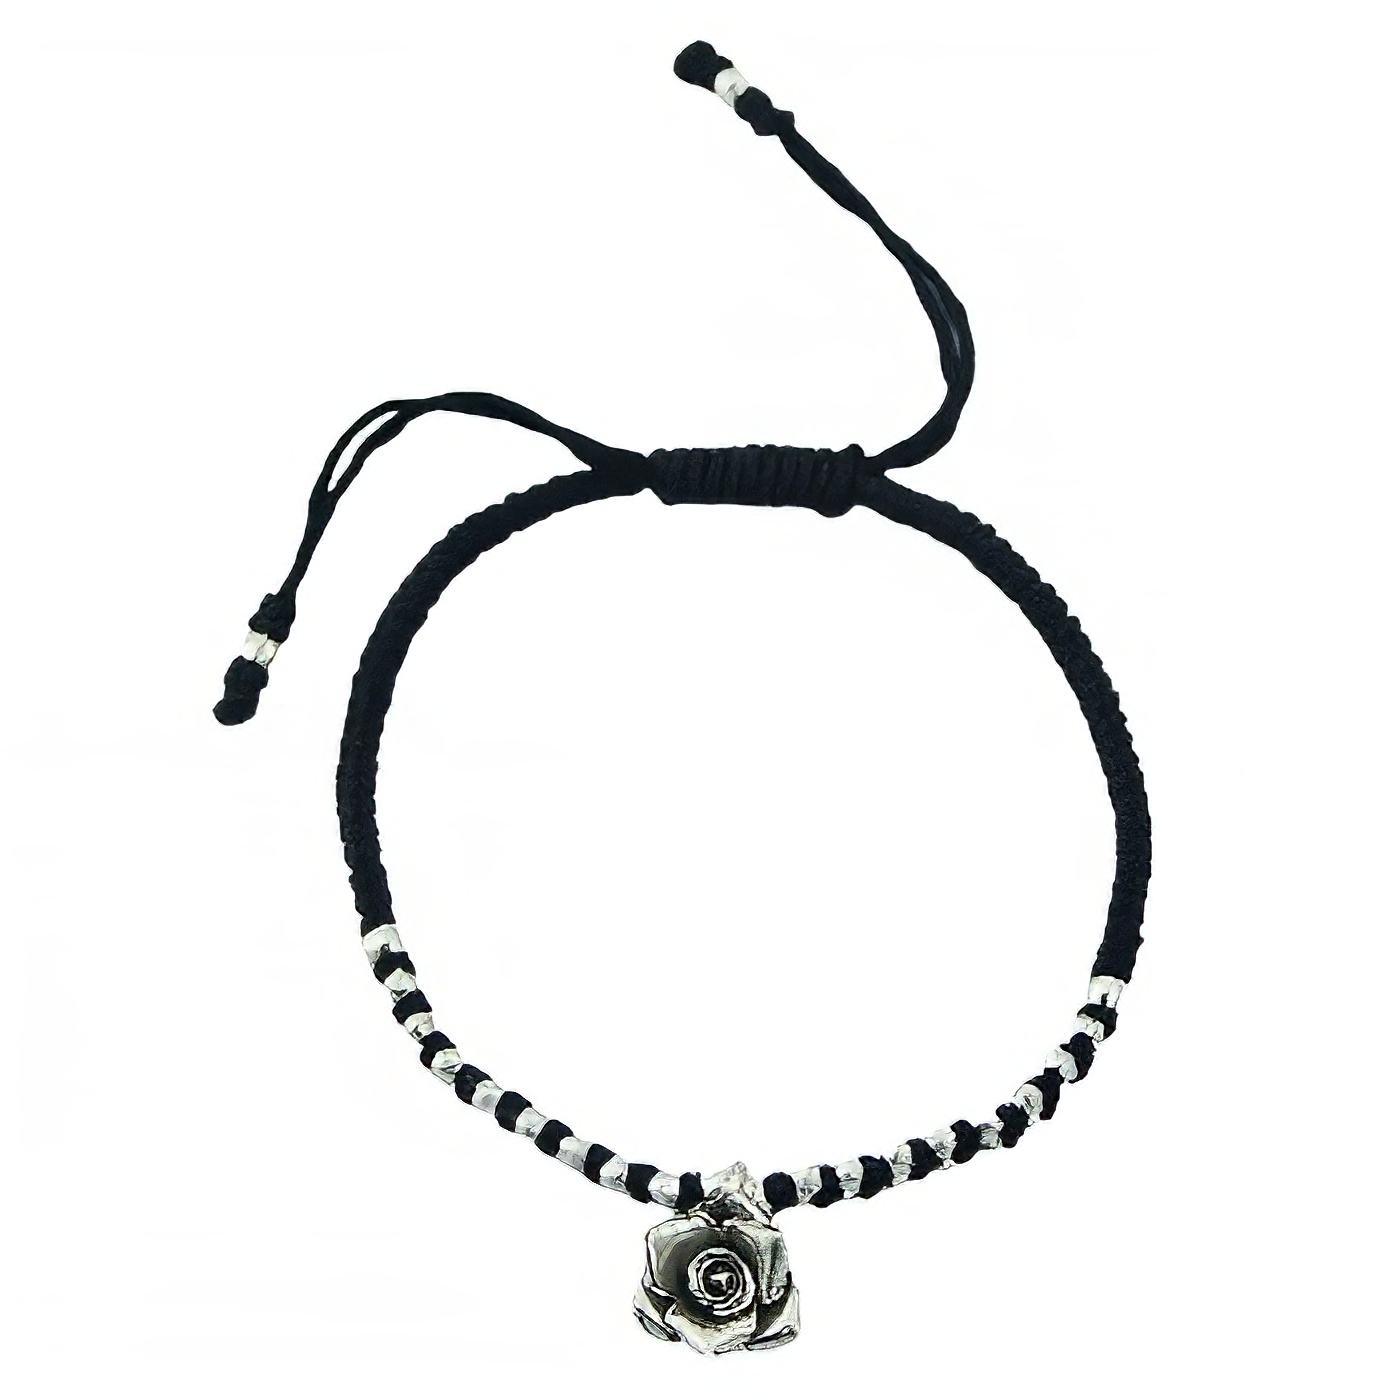 Macrame Wax Cotton Bracelet With Silver Flower Charm & Beads 